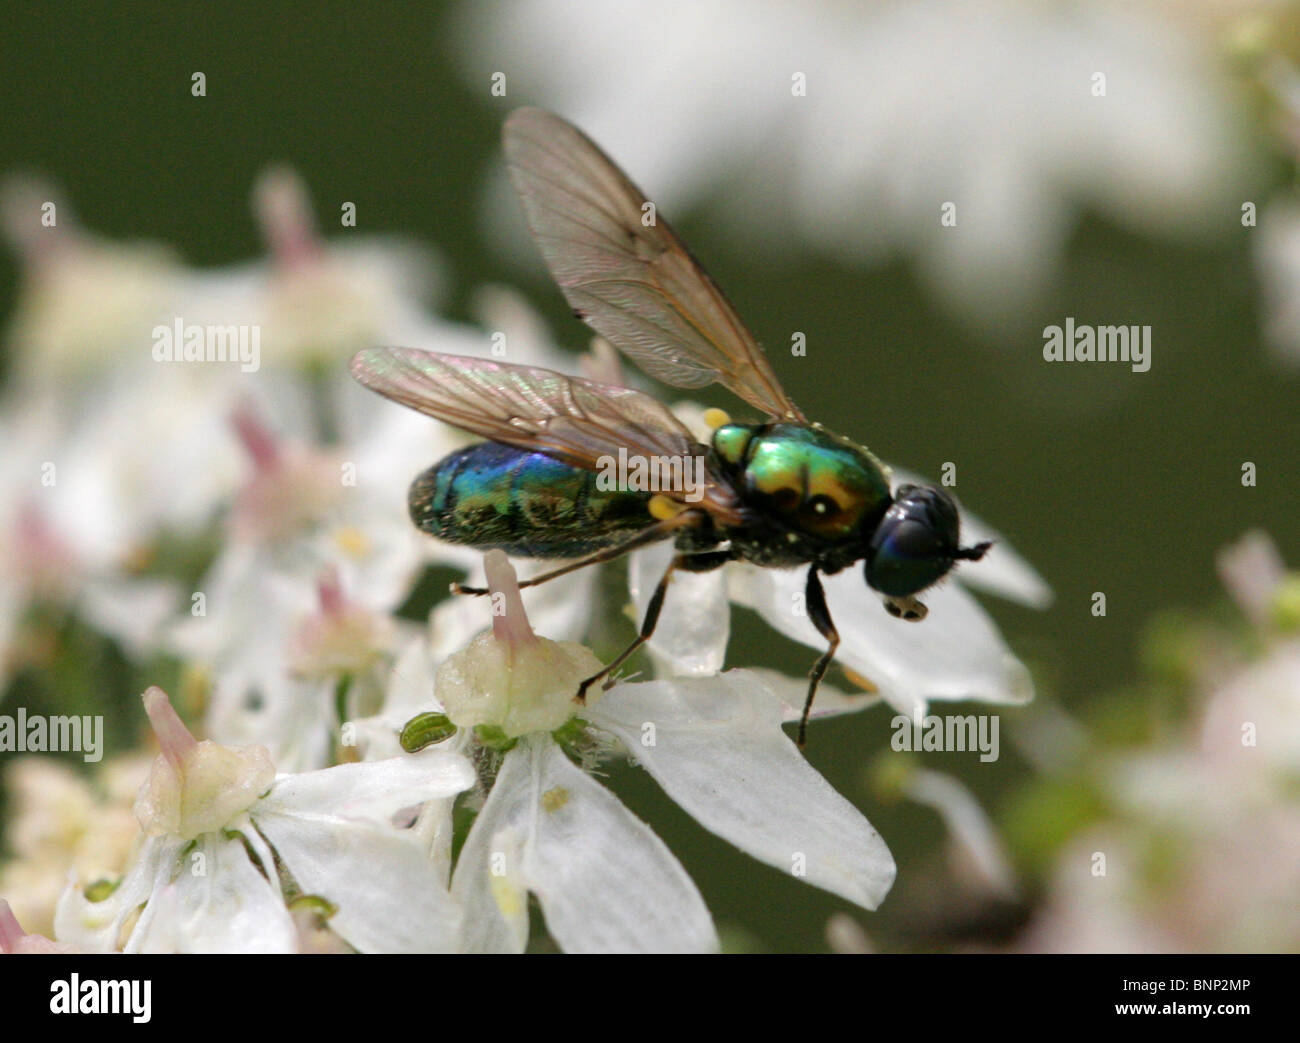 Green Soldier Fly, Chloromyia formosa, Stratiomyidae, Diptera. Aka Broad Centurion or Broad Centurion Soldier Fly. Female. Stock Photo